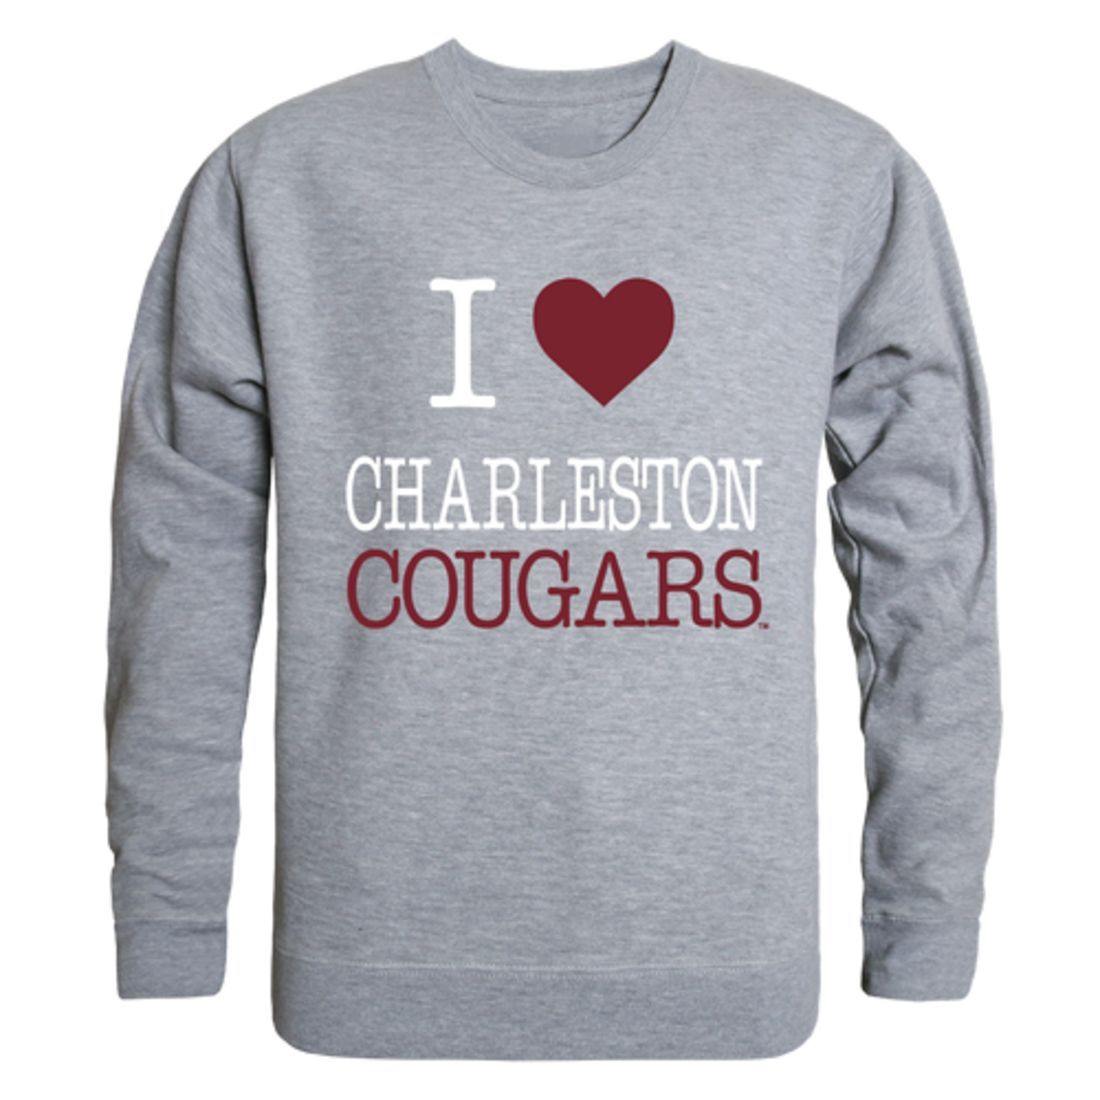 I Love COFC College of Charleston Cougars Crewneck Pullover Sweatshirt Sweater-Campus-Wardrobe